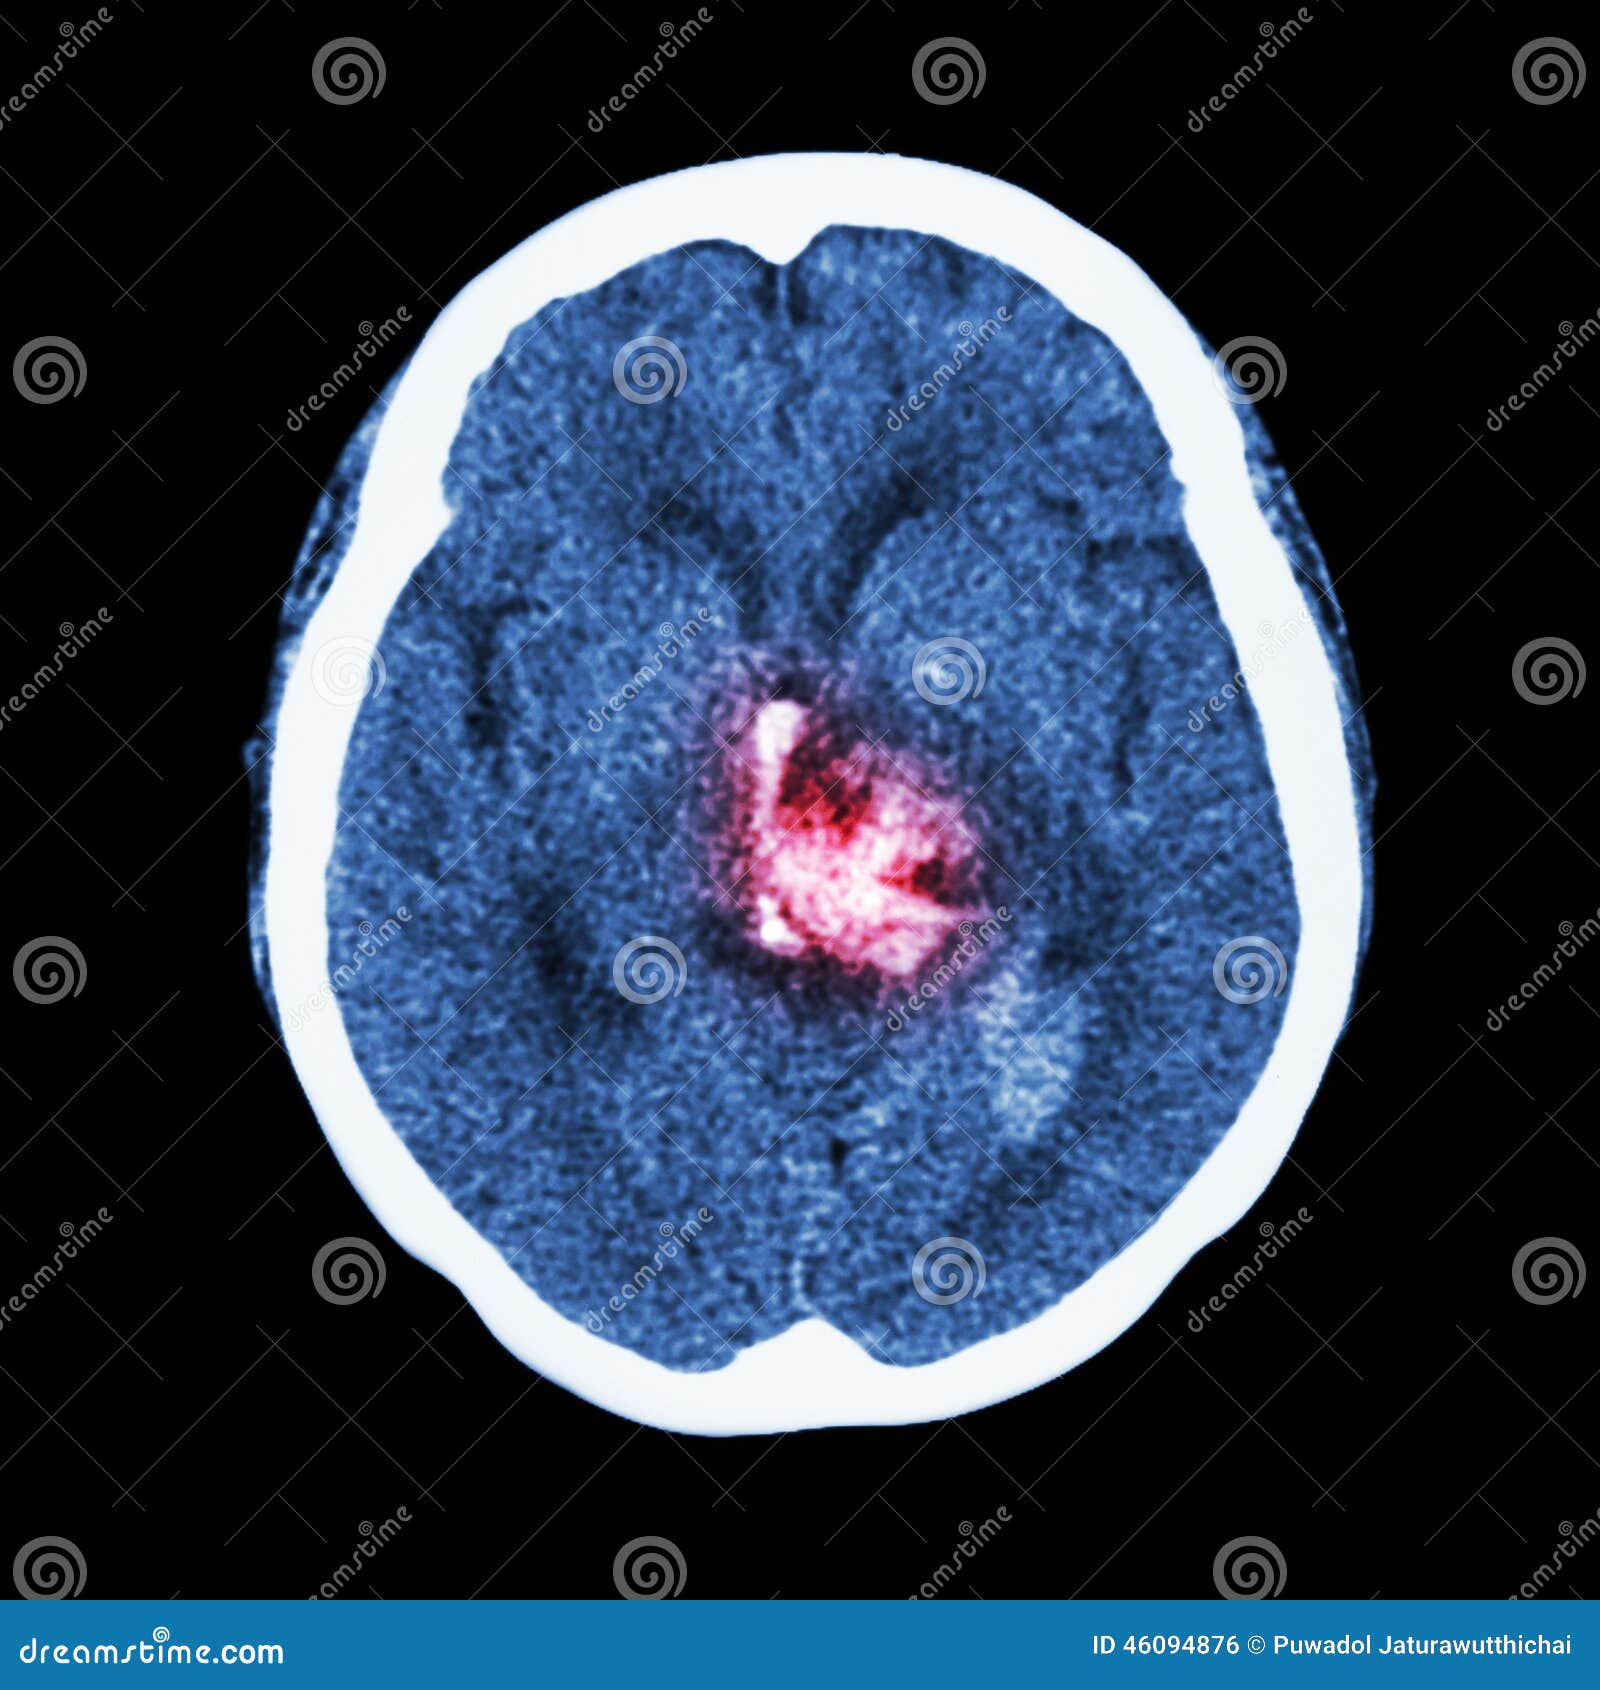 ct scan of brain : show hemorrhagic stroke